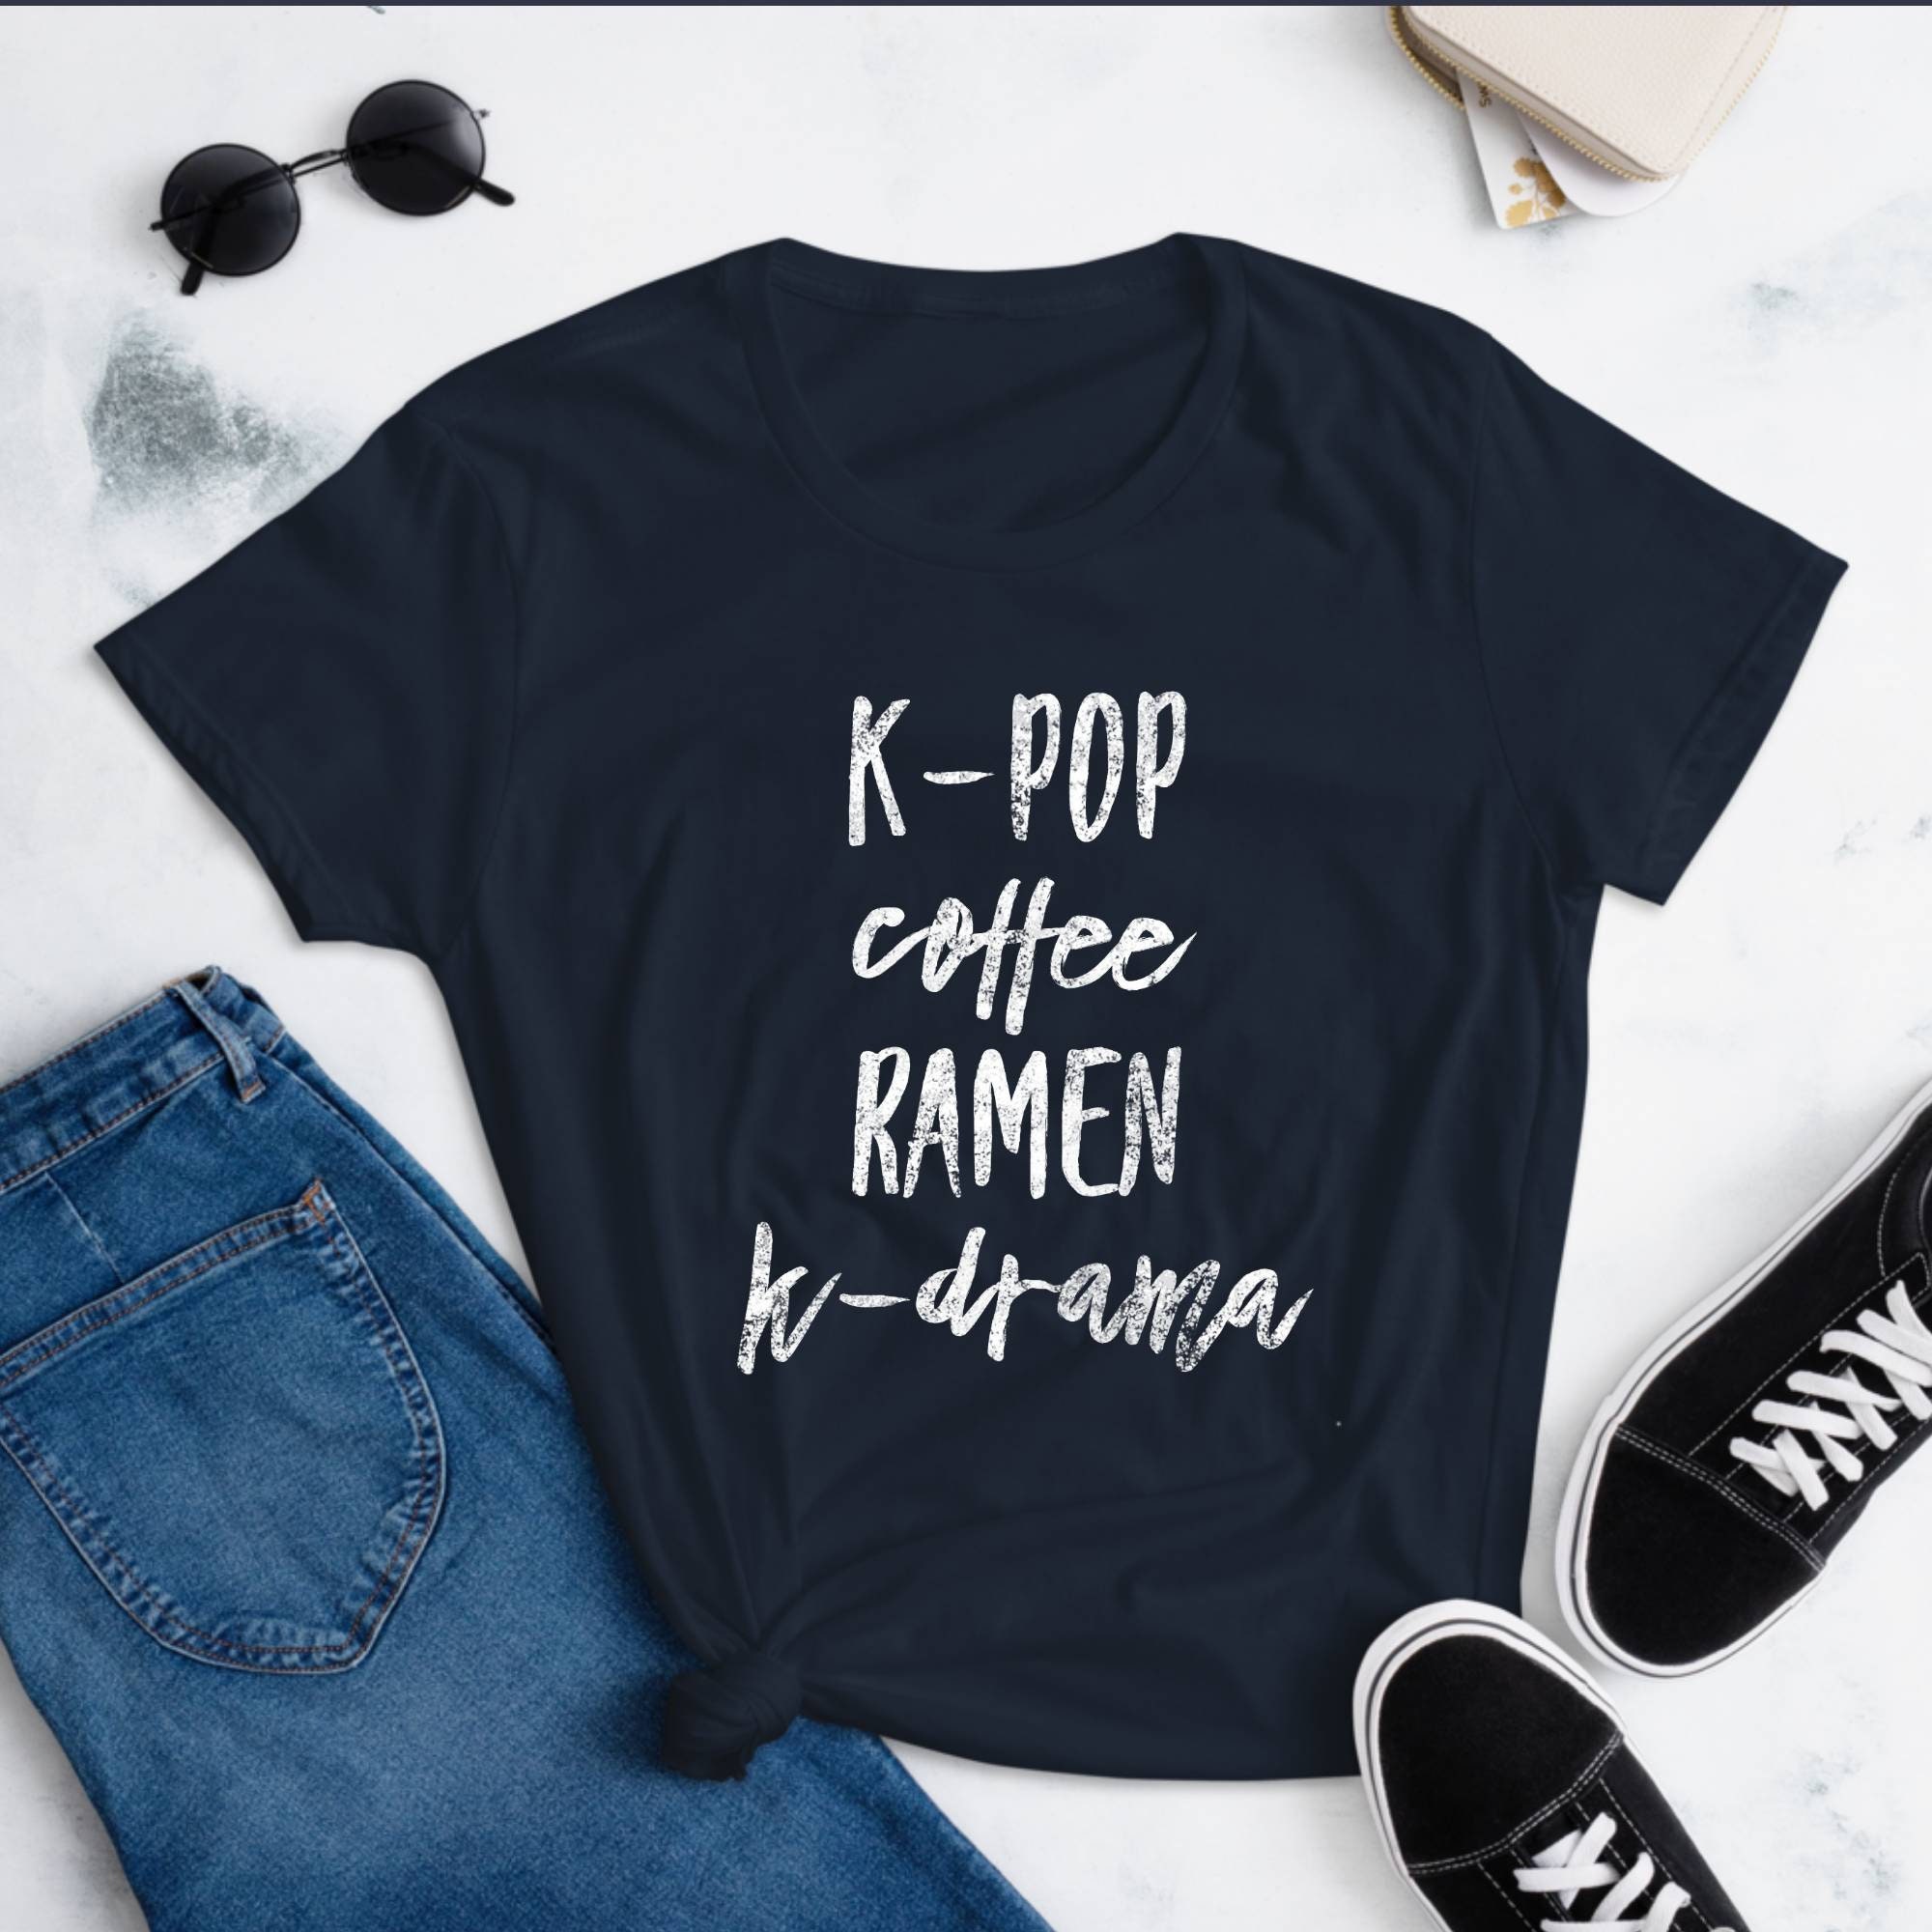 K-Pop Coffee Ramen K-Drama Shirt, Hoodie, Sweatshirt, Funny Korean T-Shirt, Christmas Gift Korean, Kpop Kdrama Distressed Shirt